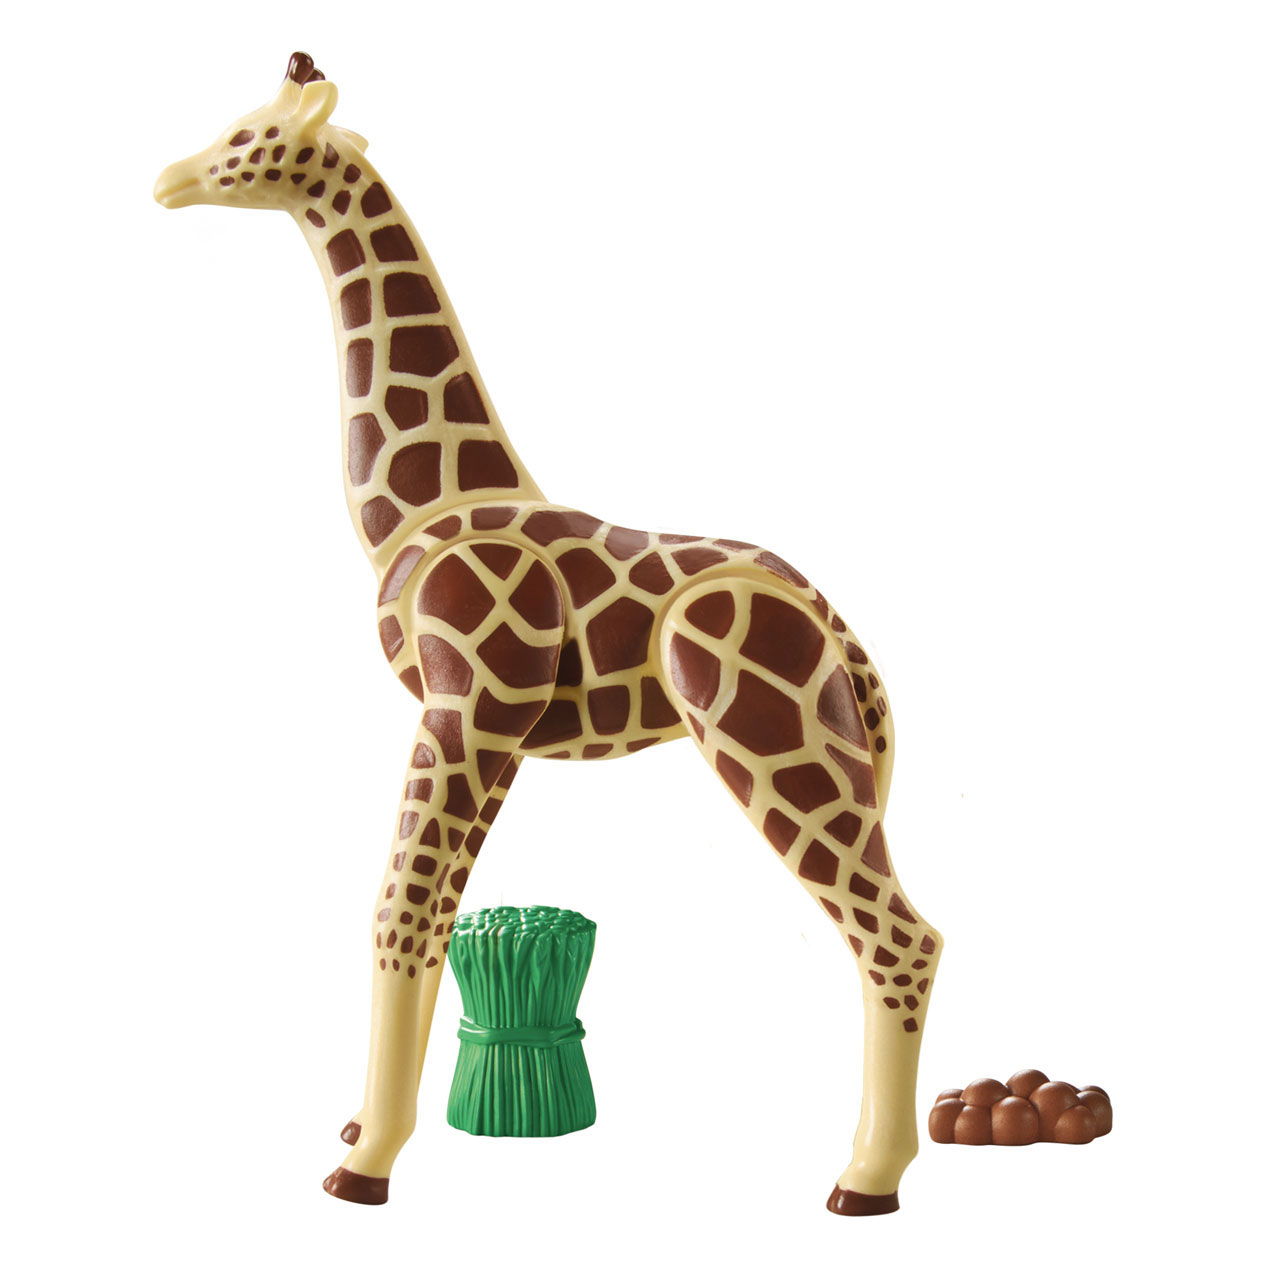 Playmobil Wiltopa Giraf - 71048